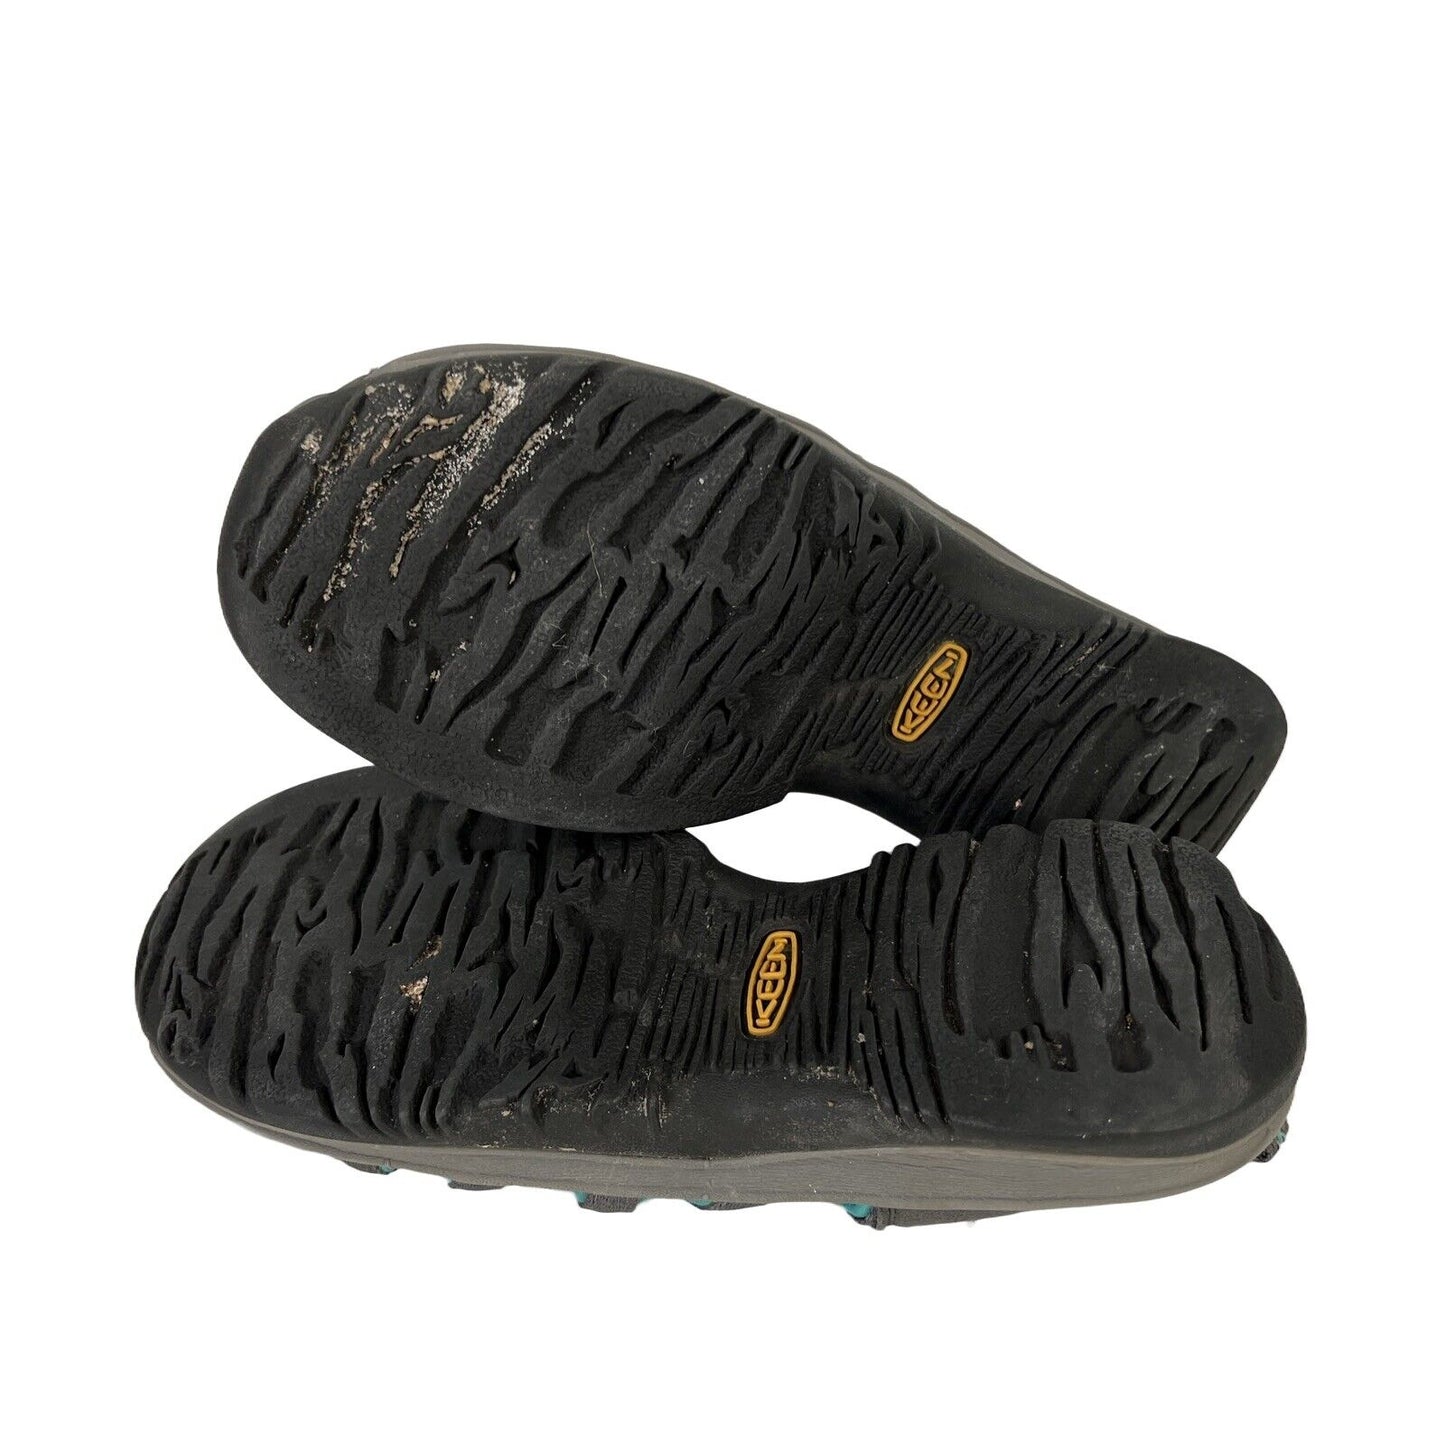 Keen Women's Gray/Blue Whisper Closed Toe Hiking Sport Sandals - 7